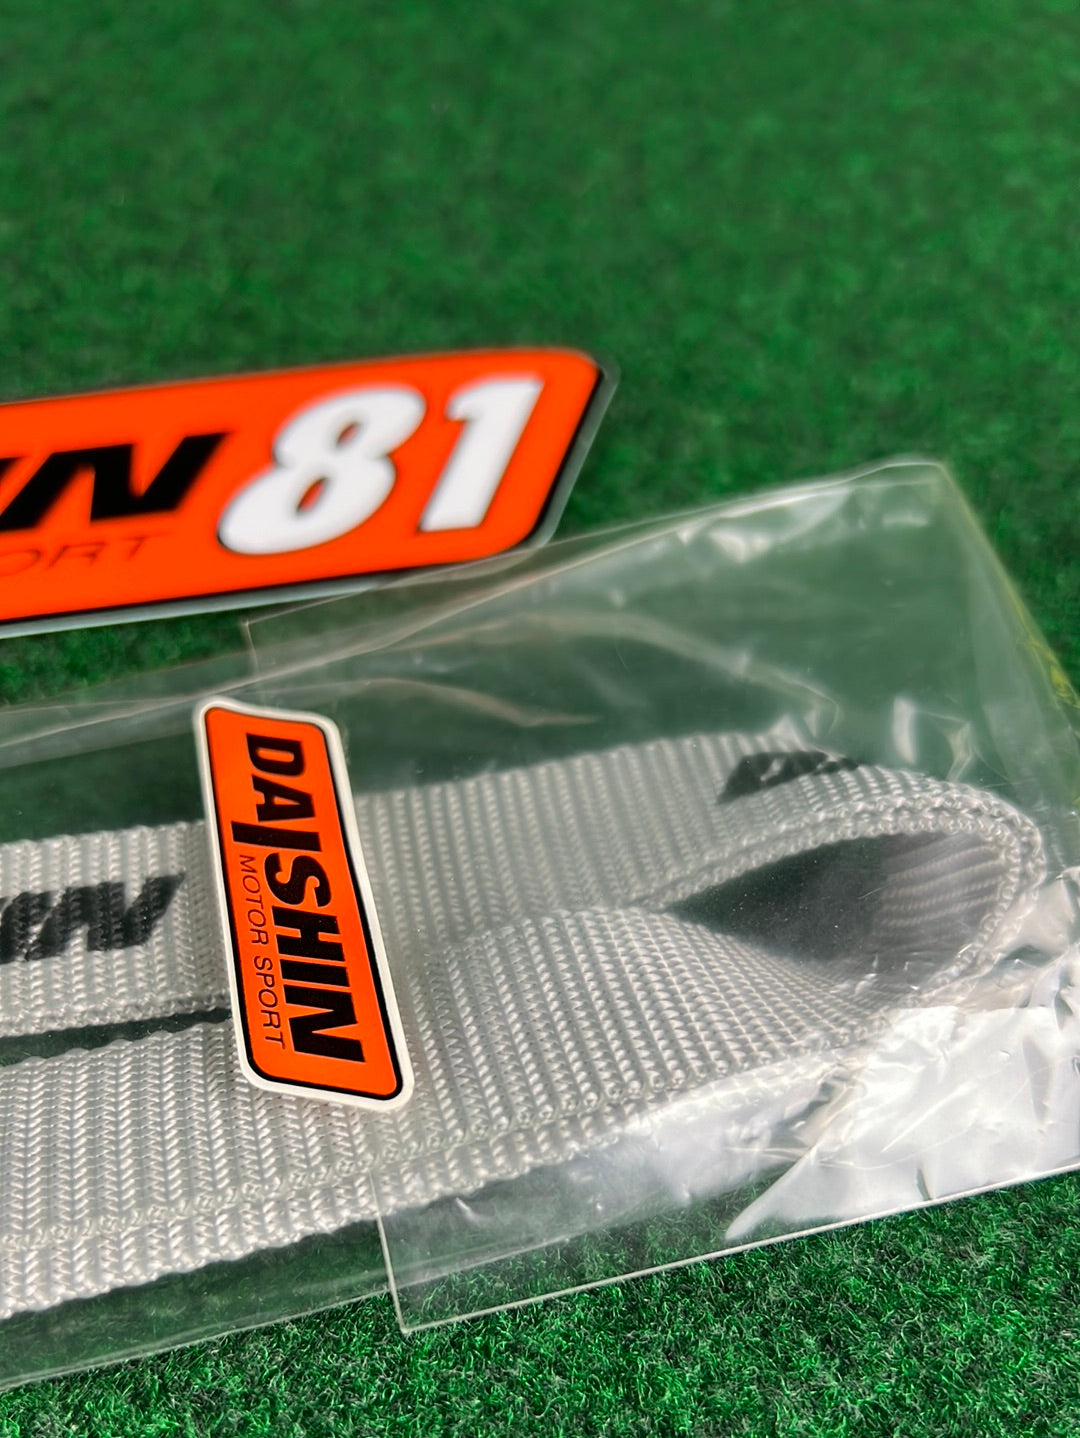 Daishin Motor Sport No. 81 Lanyard and Stickers Set